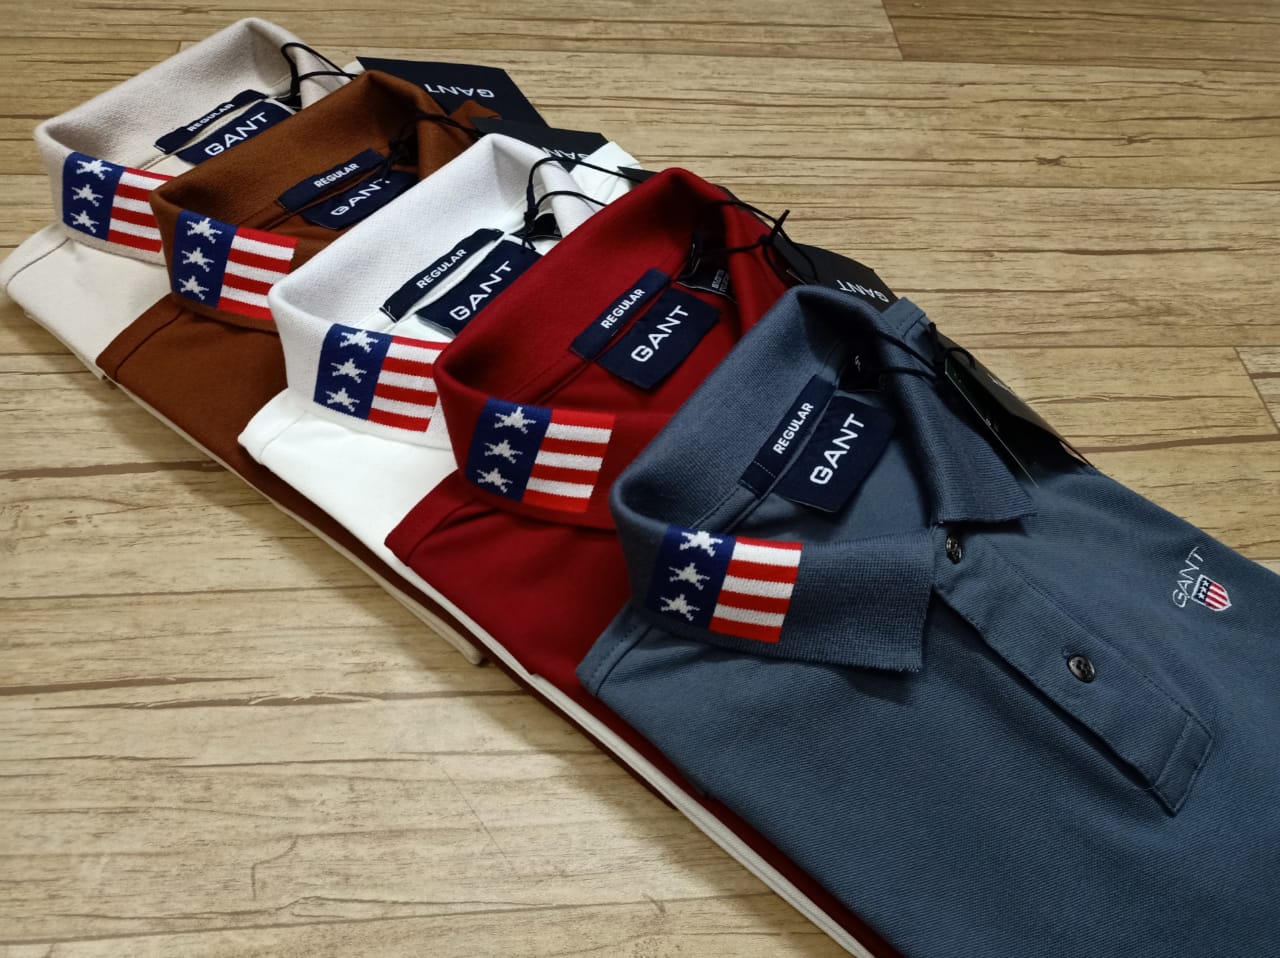 Imported Super Premium Cotton Polo Shirt For Men (ZGANT01) - Grey